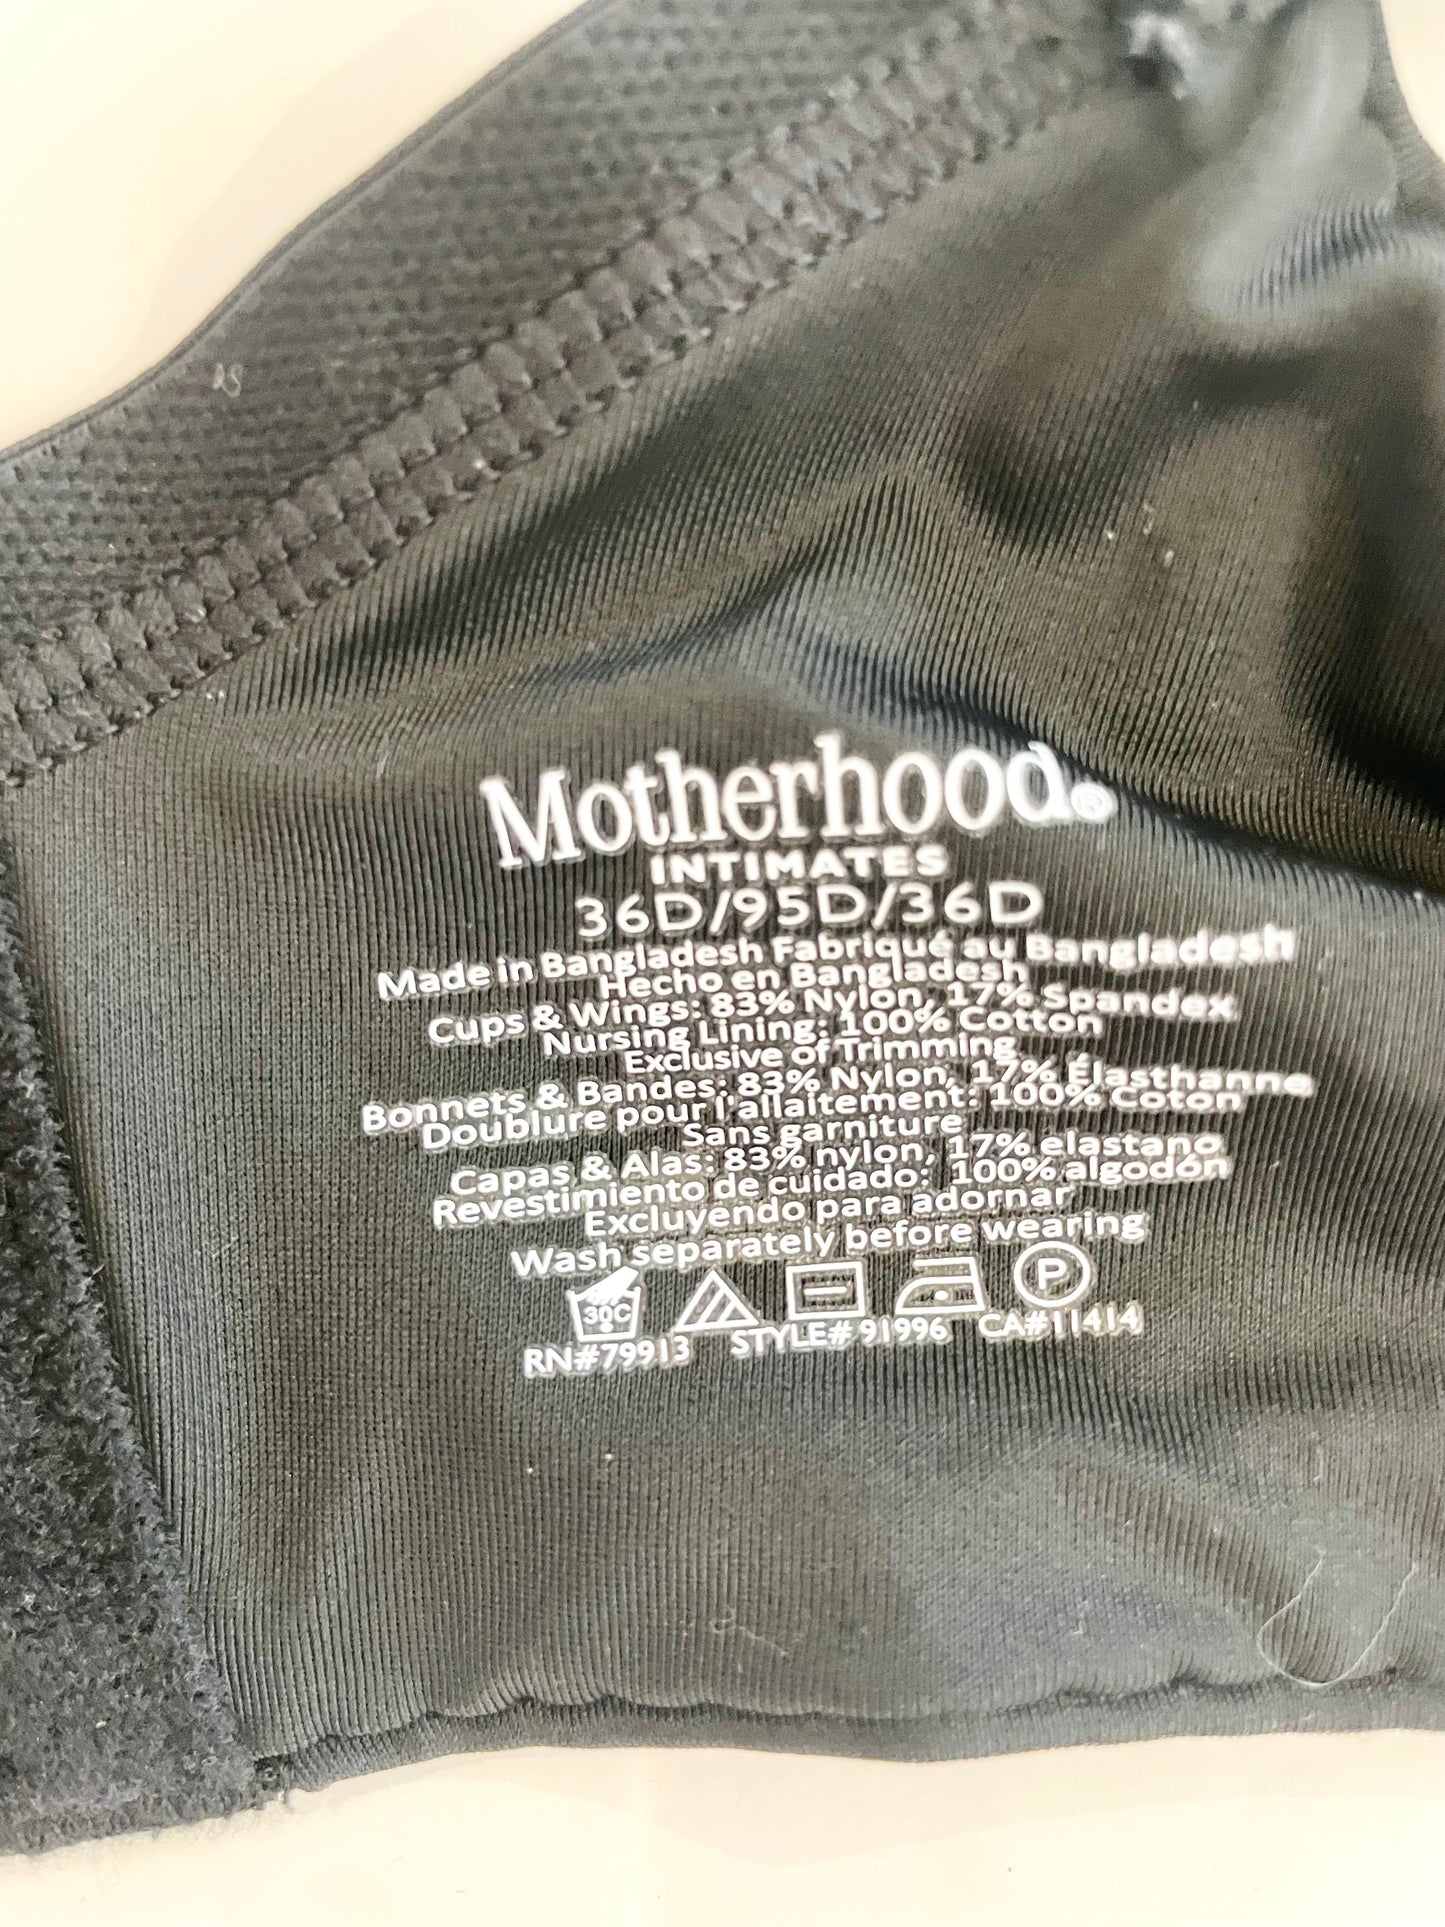 Motherhood maternity nursing bras black set of 2 size 36D